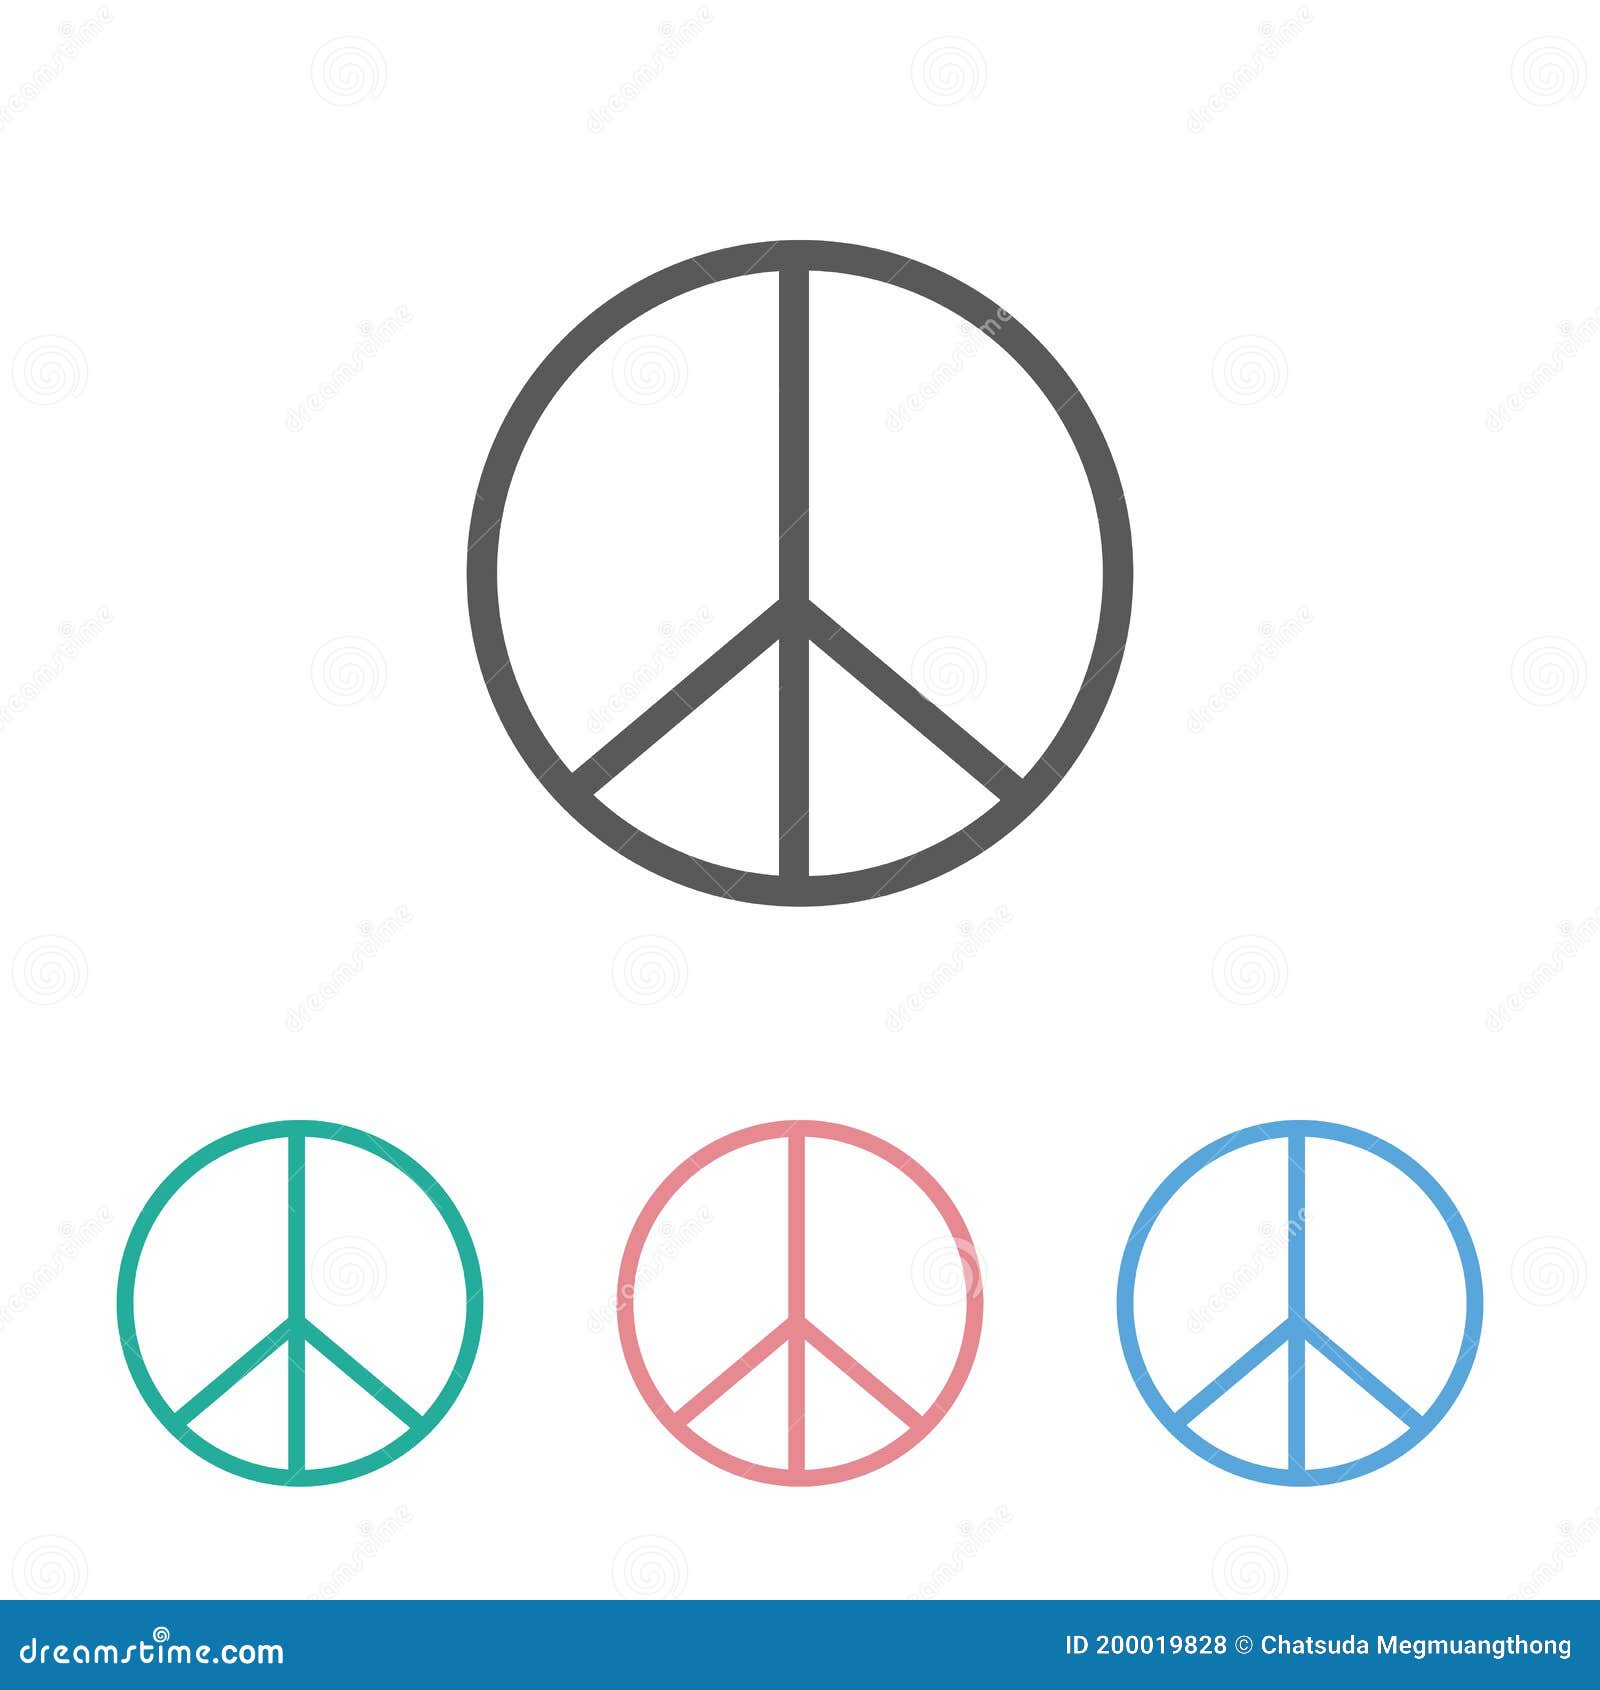 peace icon, tranquility, quietness, calmness, peacefulness